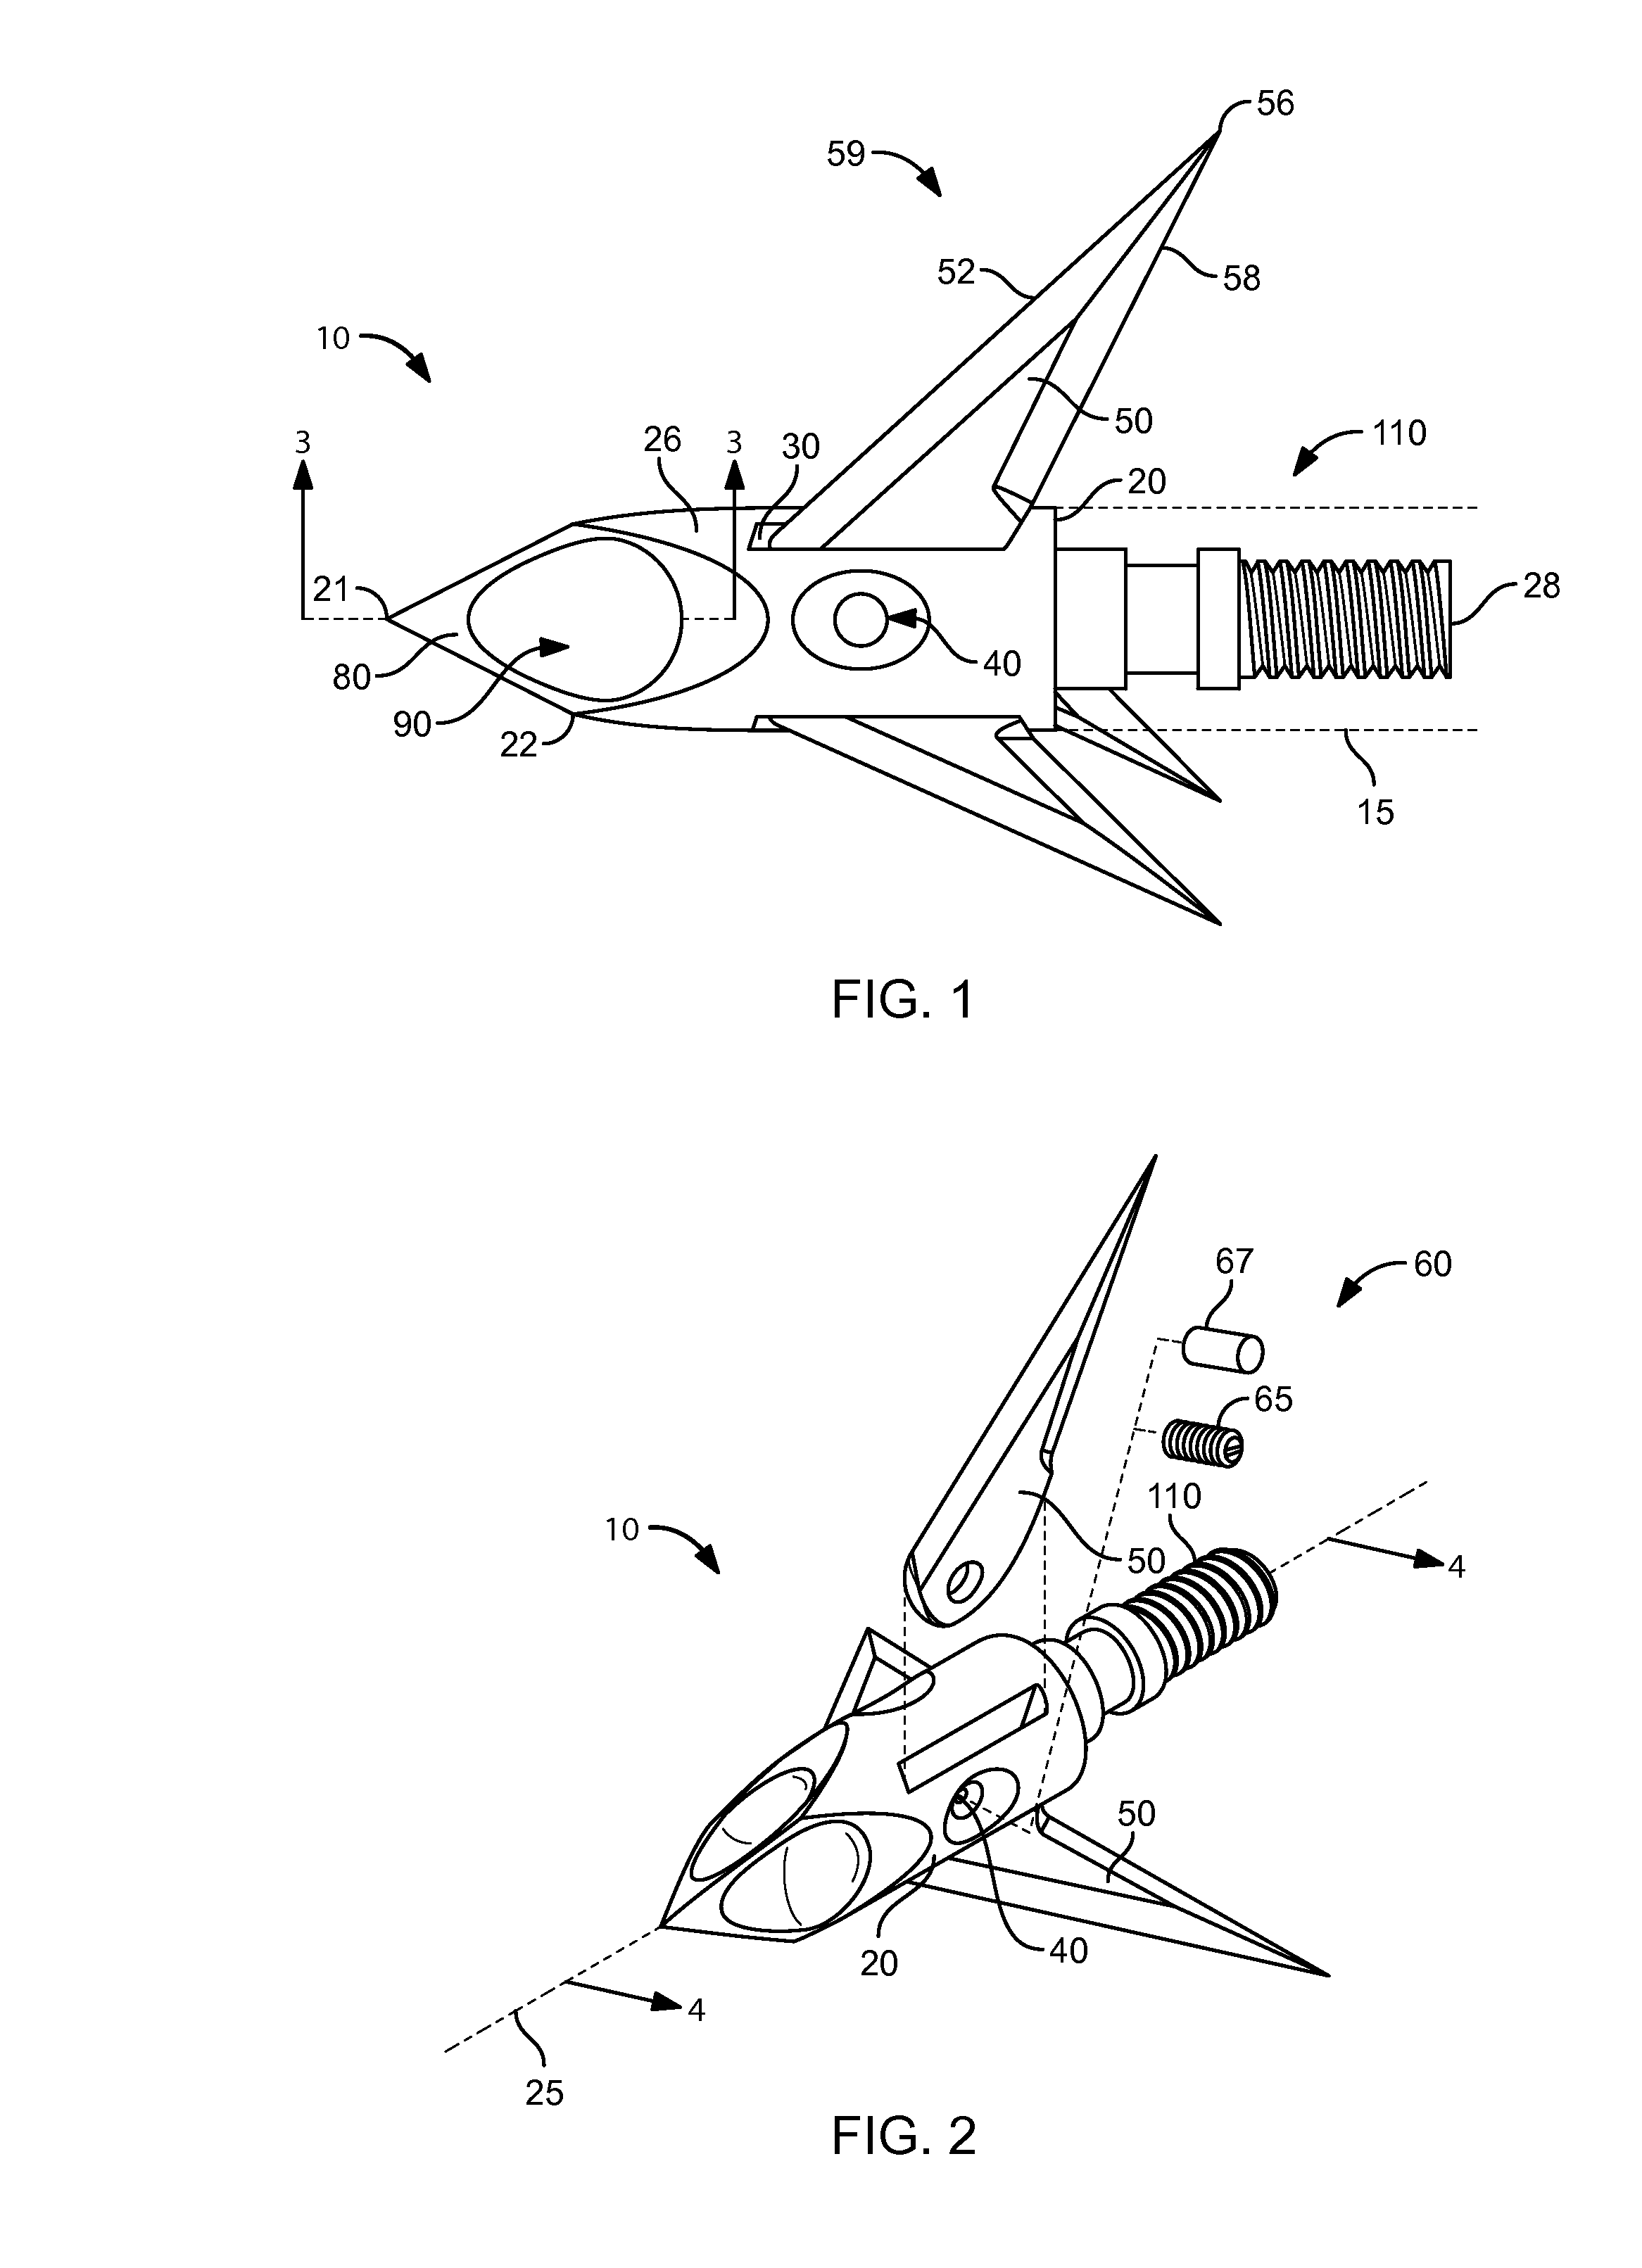 Pivoting-blade deep-penetration arrowhead